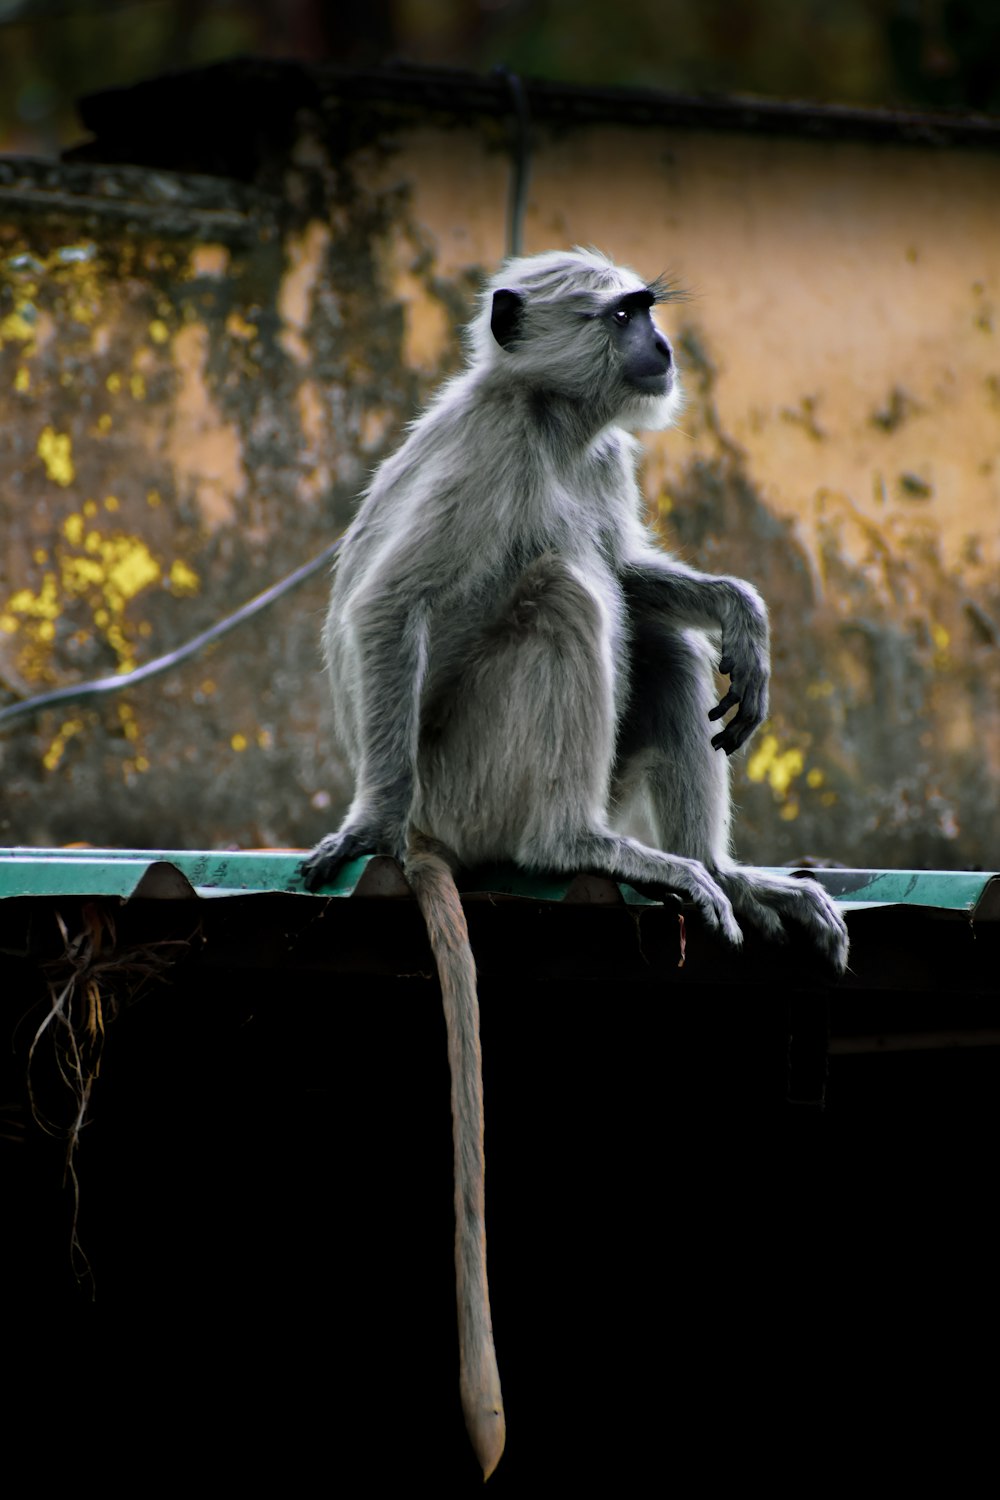 a lemur sitting on a branch